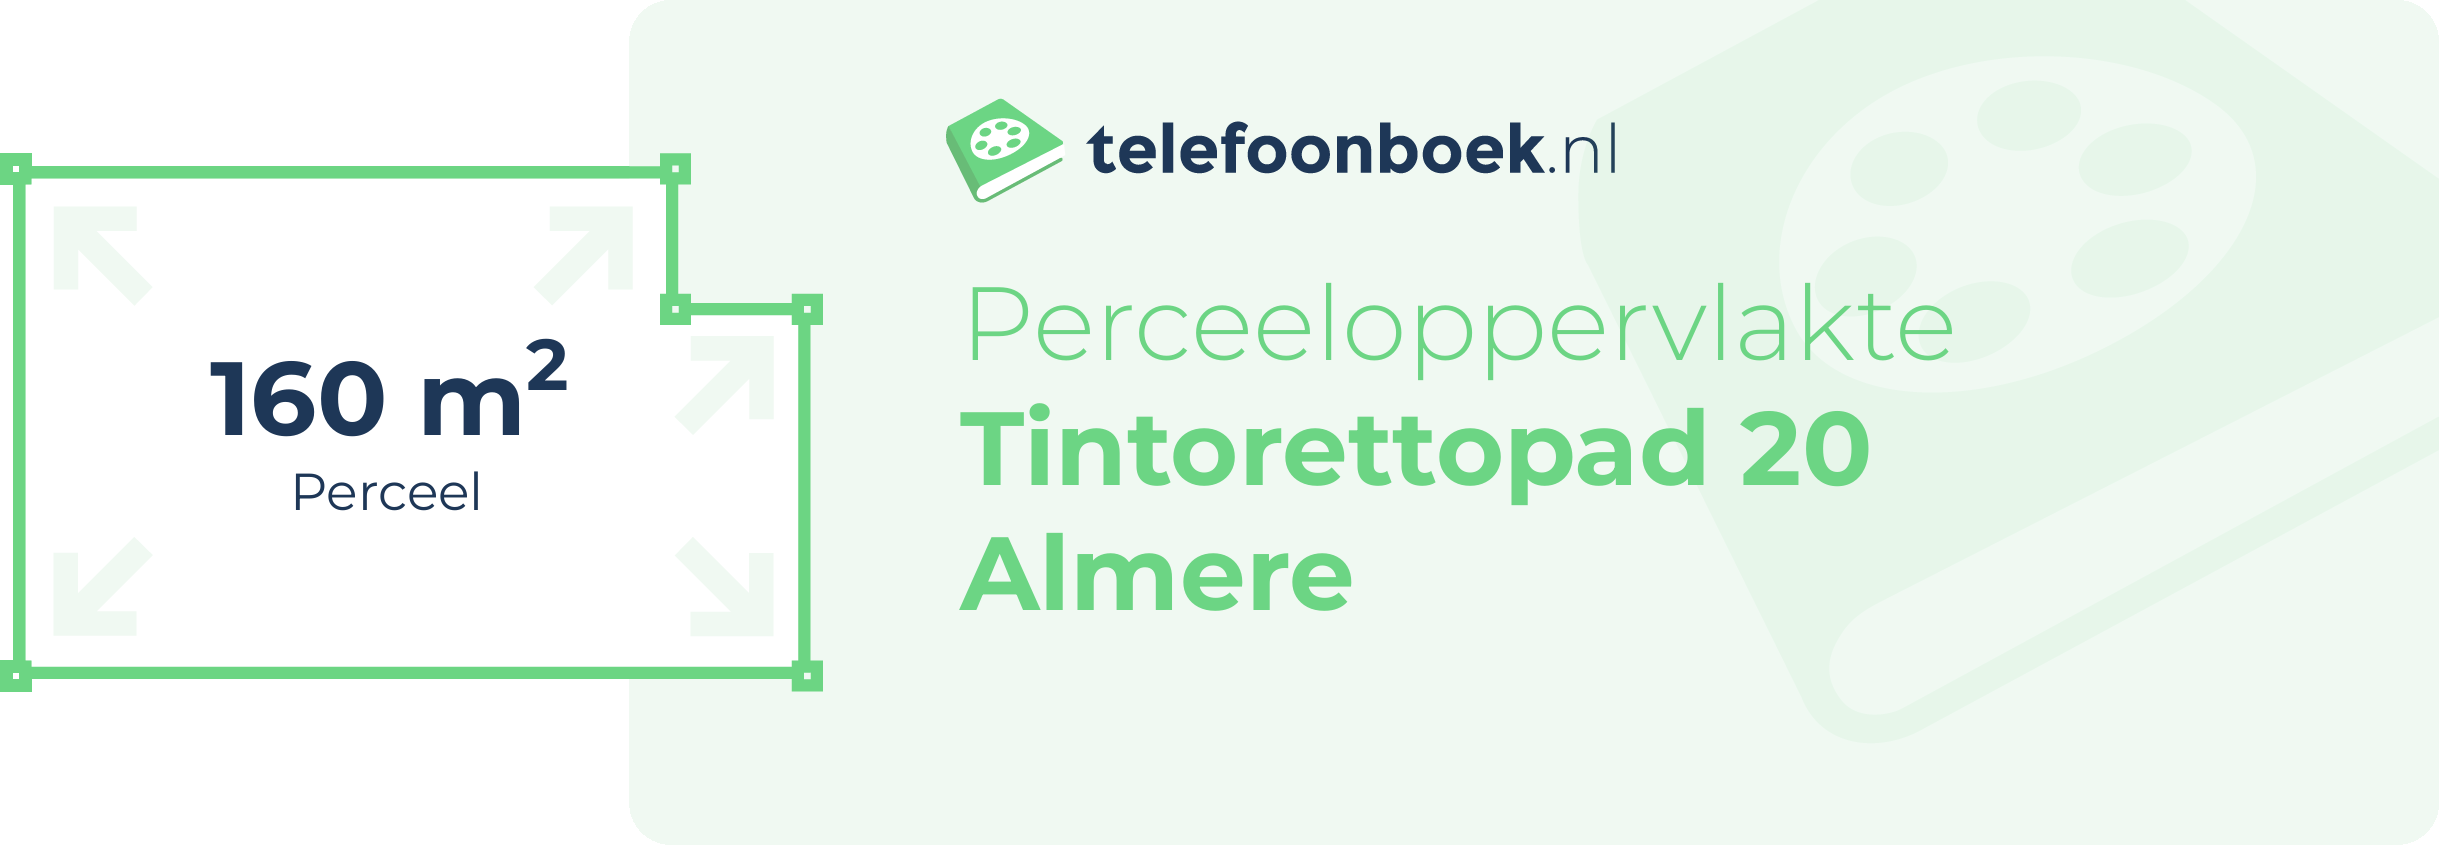 Perceeloppervlakte Tintorettopad 20 Almere